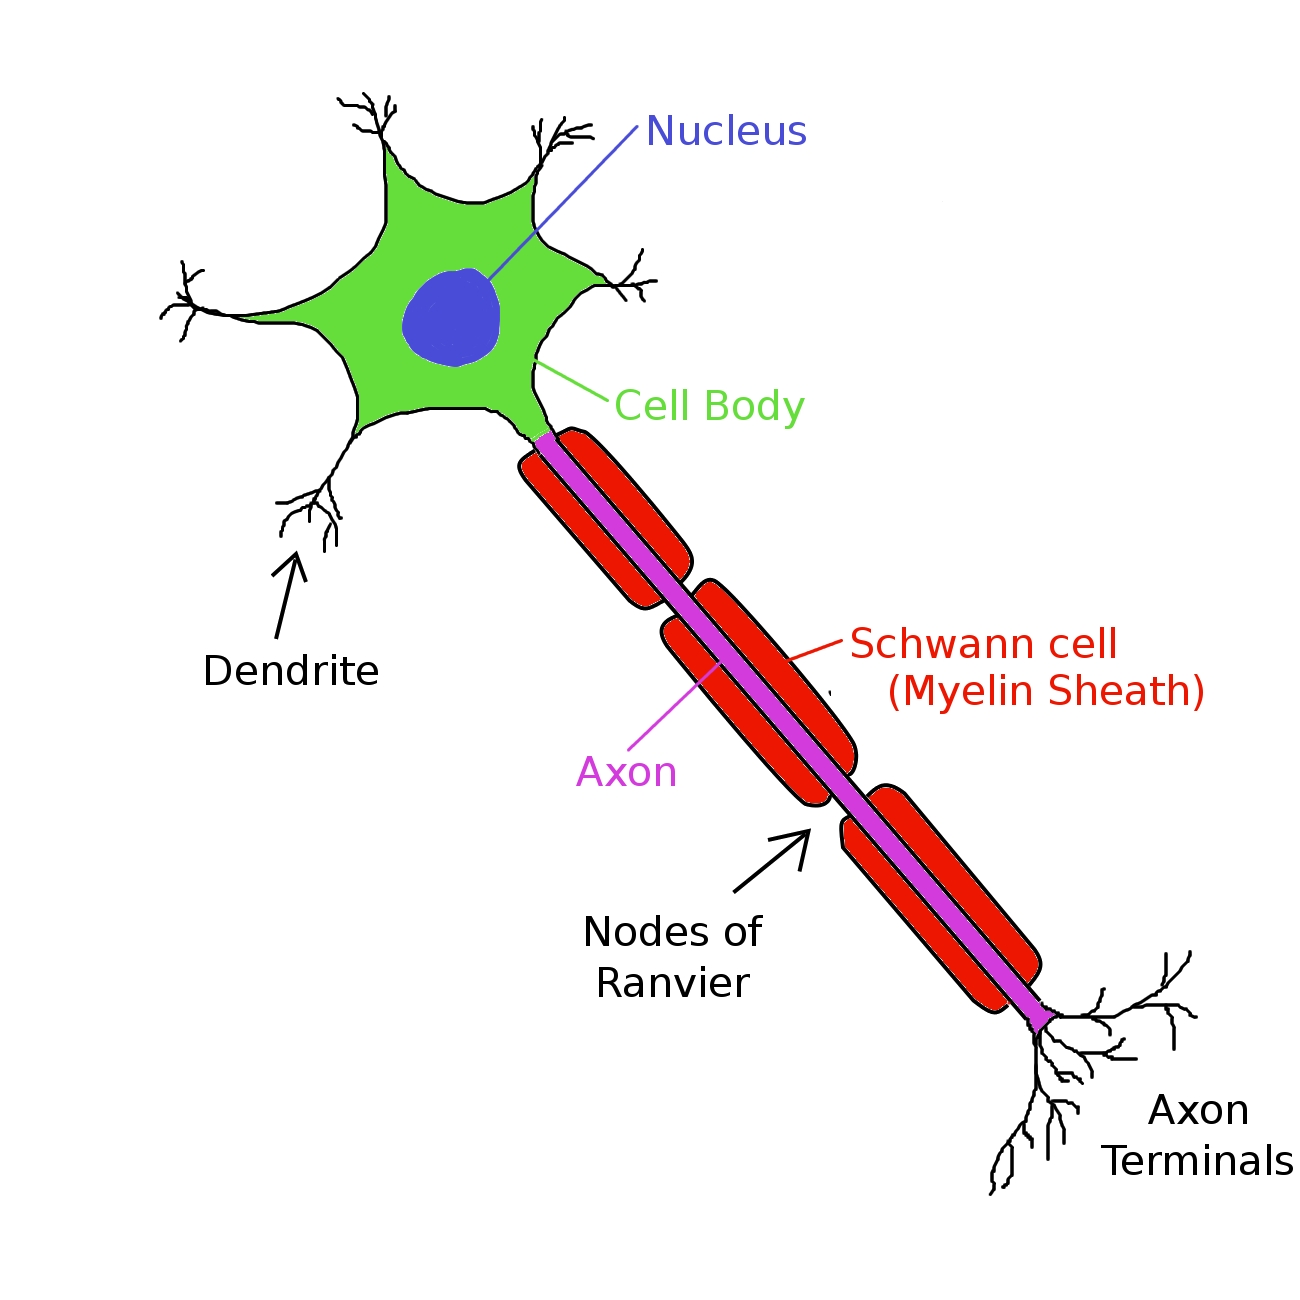 neuroglia diagram